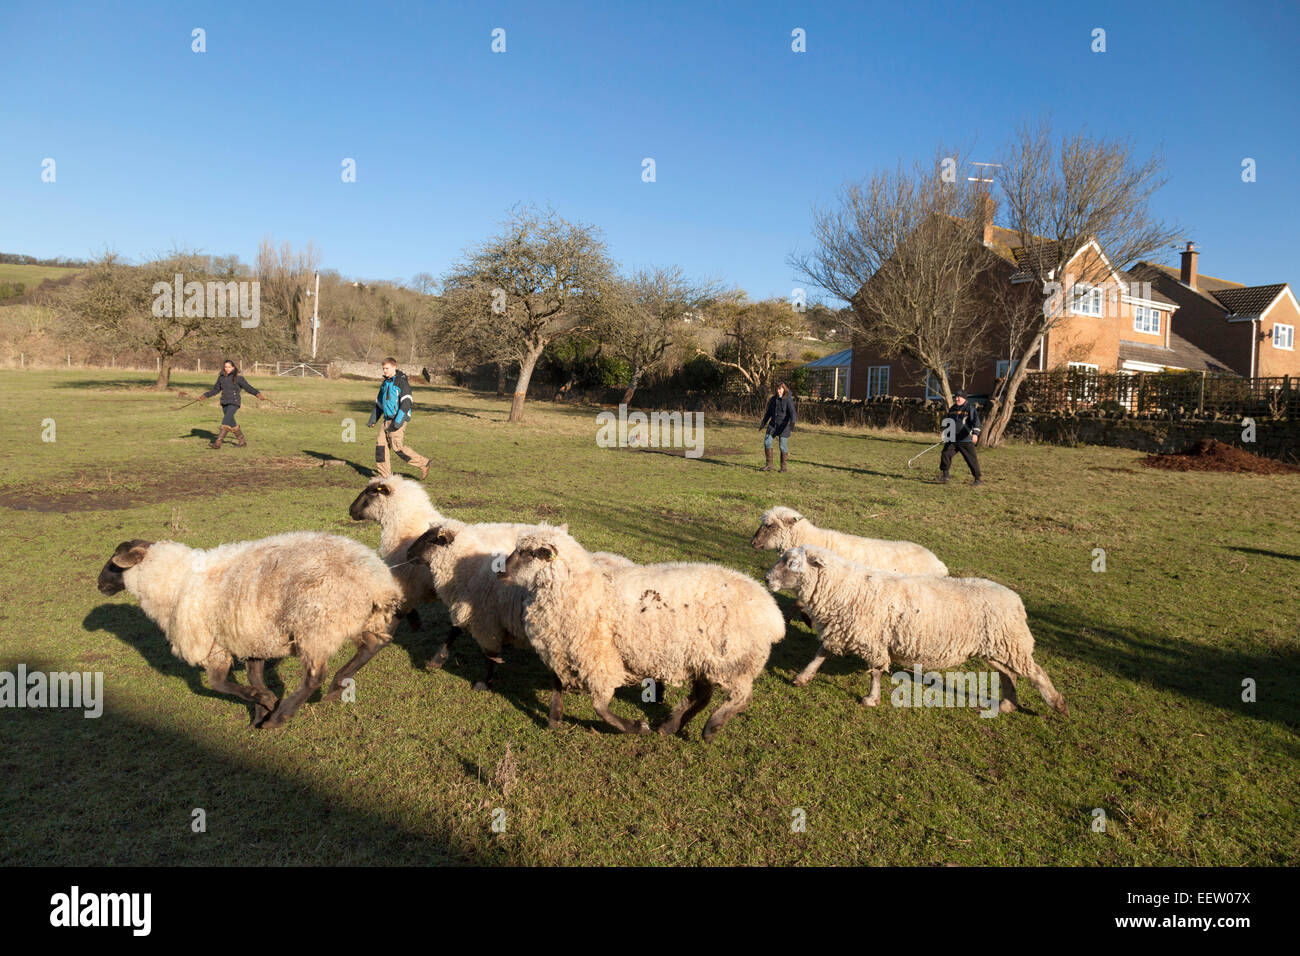 People herding sheep on a smallholding or small farm, Bleadon village, Somerset, England UK Stock Photo